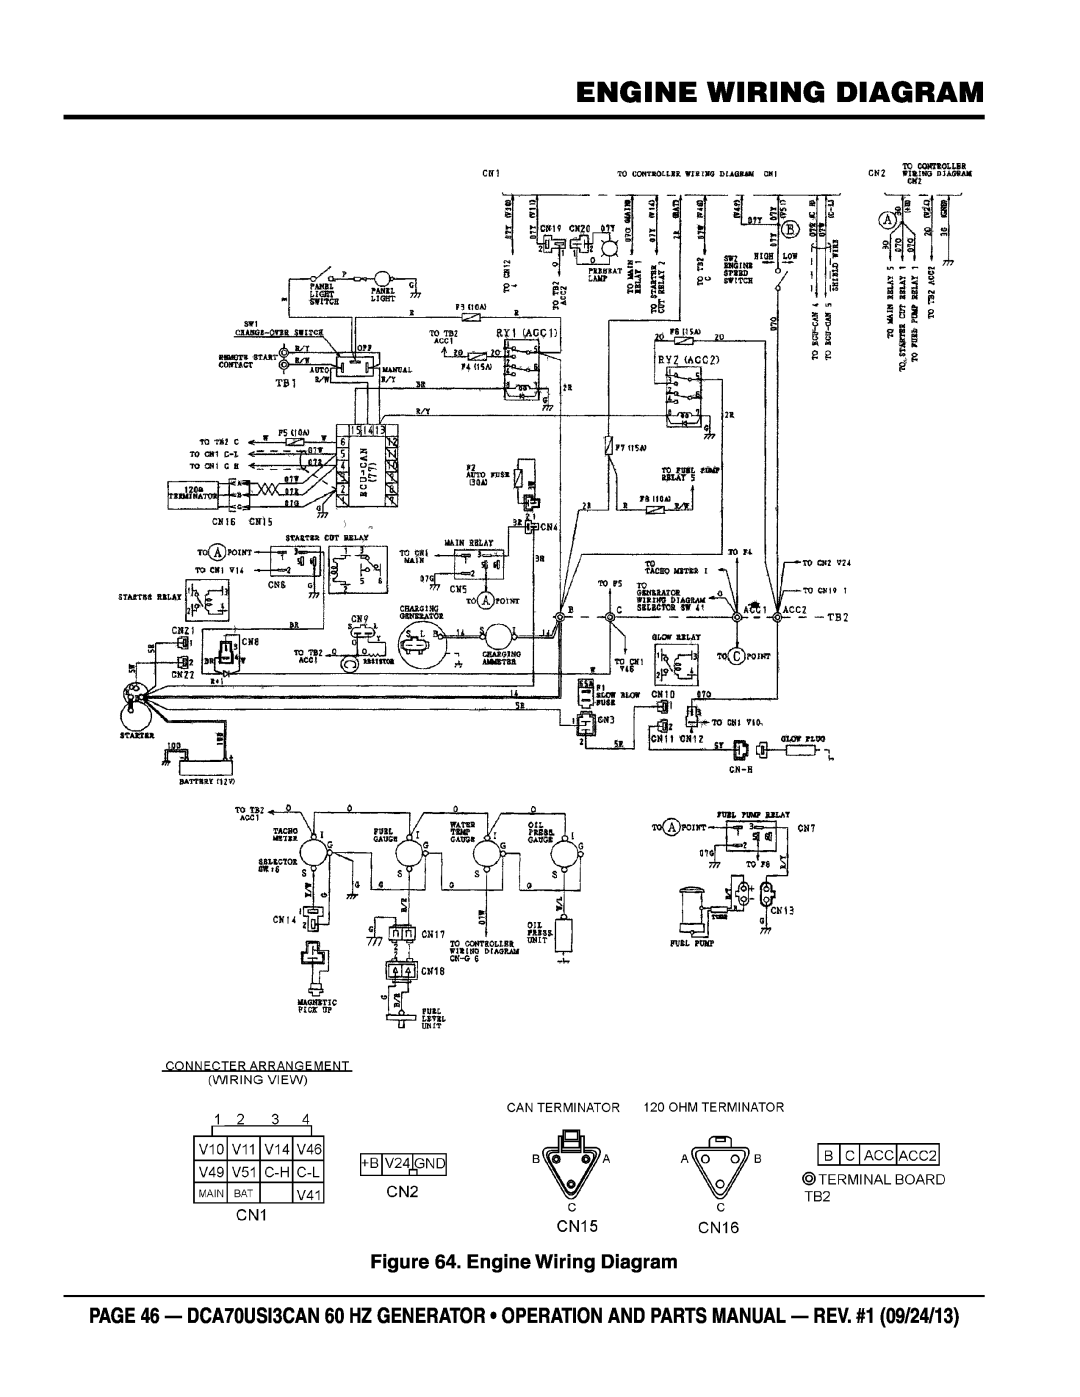 Multiquip DCA70US13CAN manual Engine Wiring Diagram 